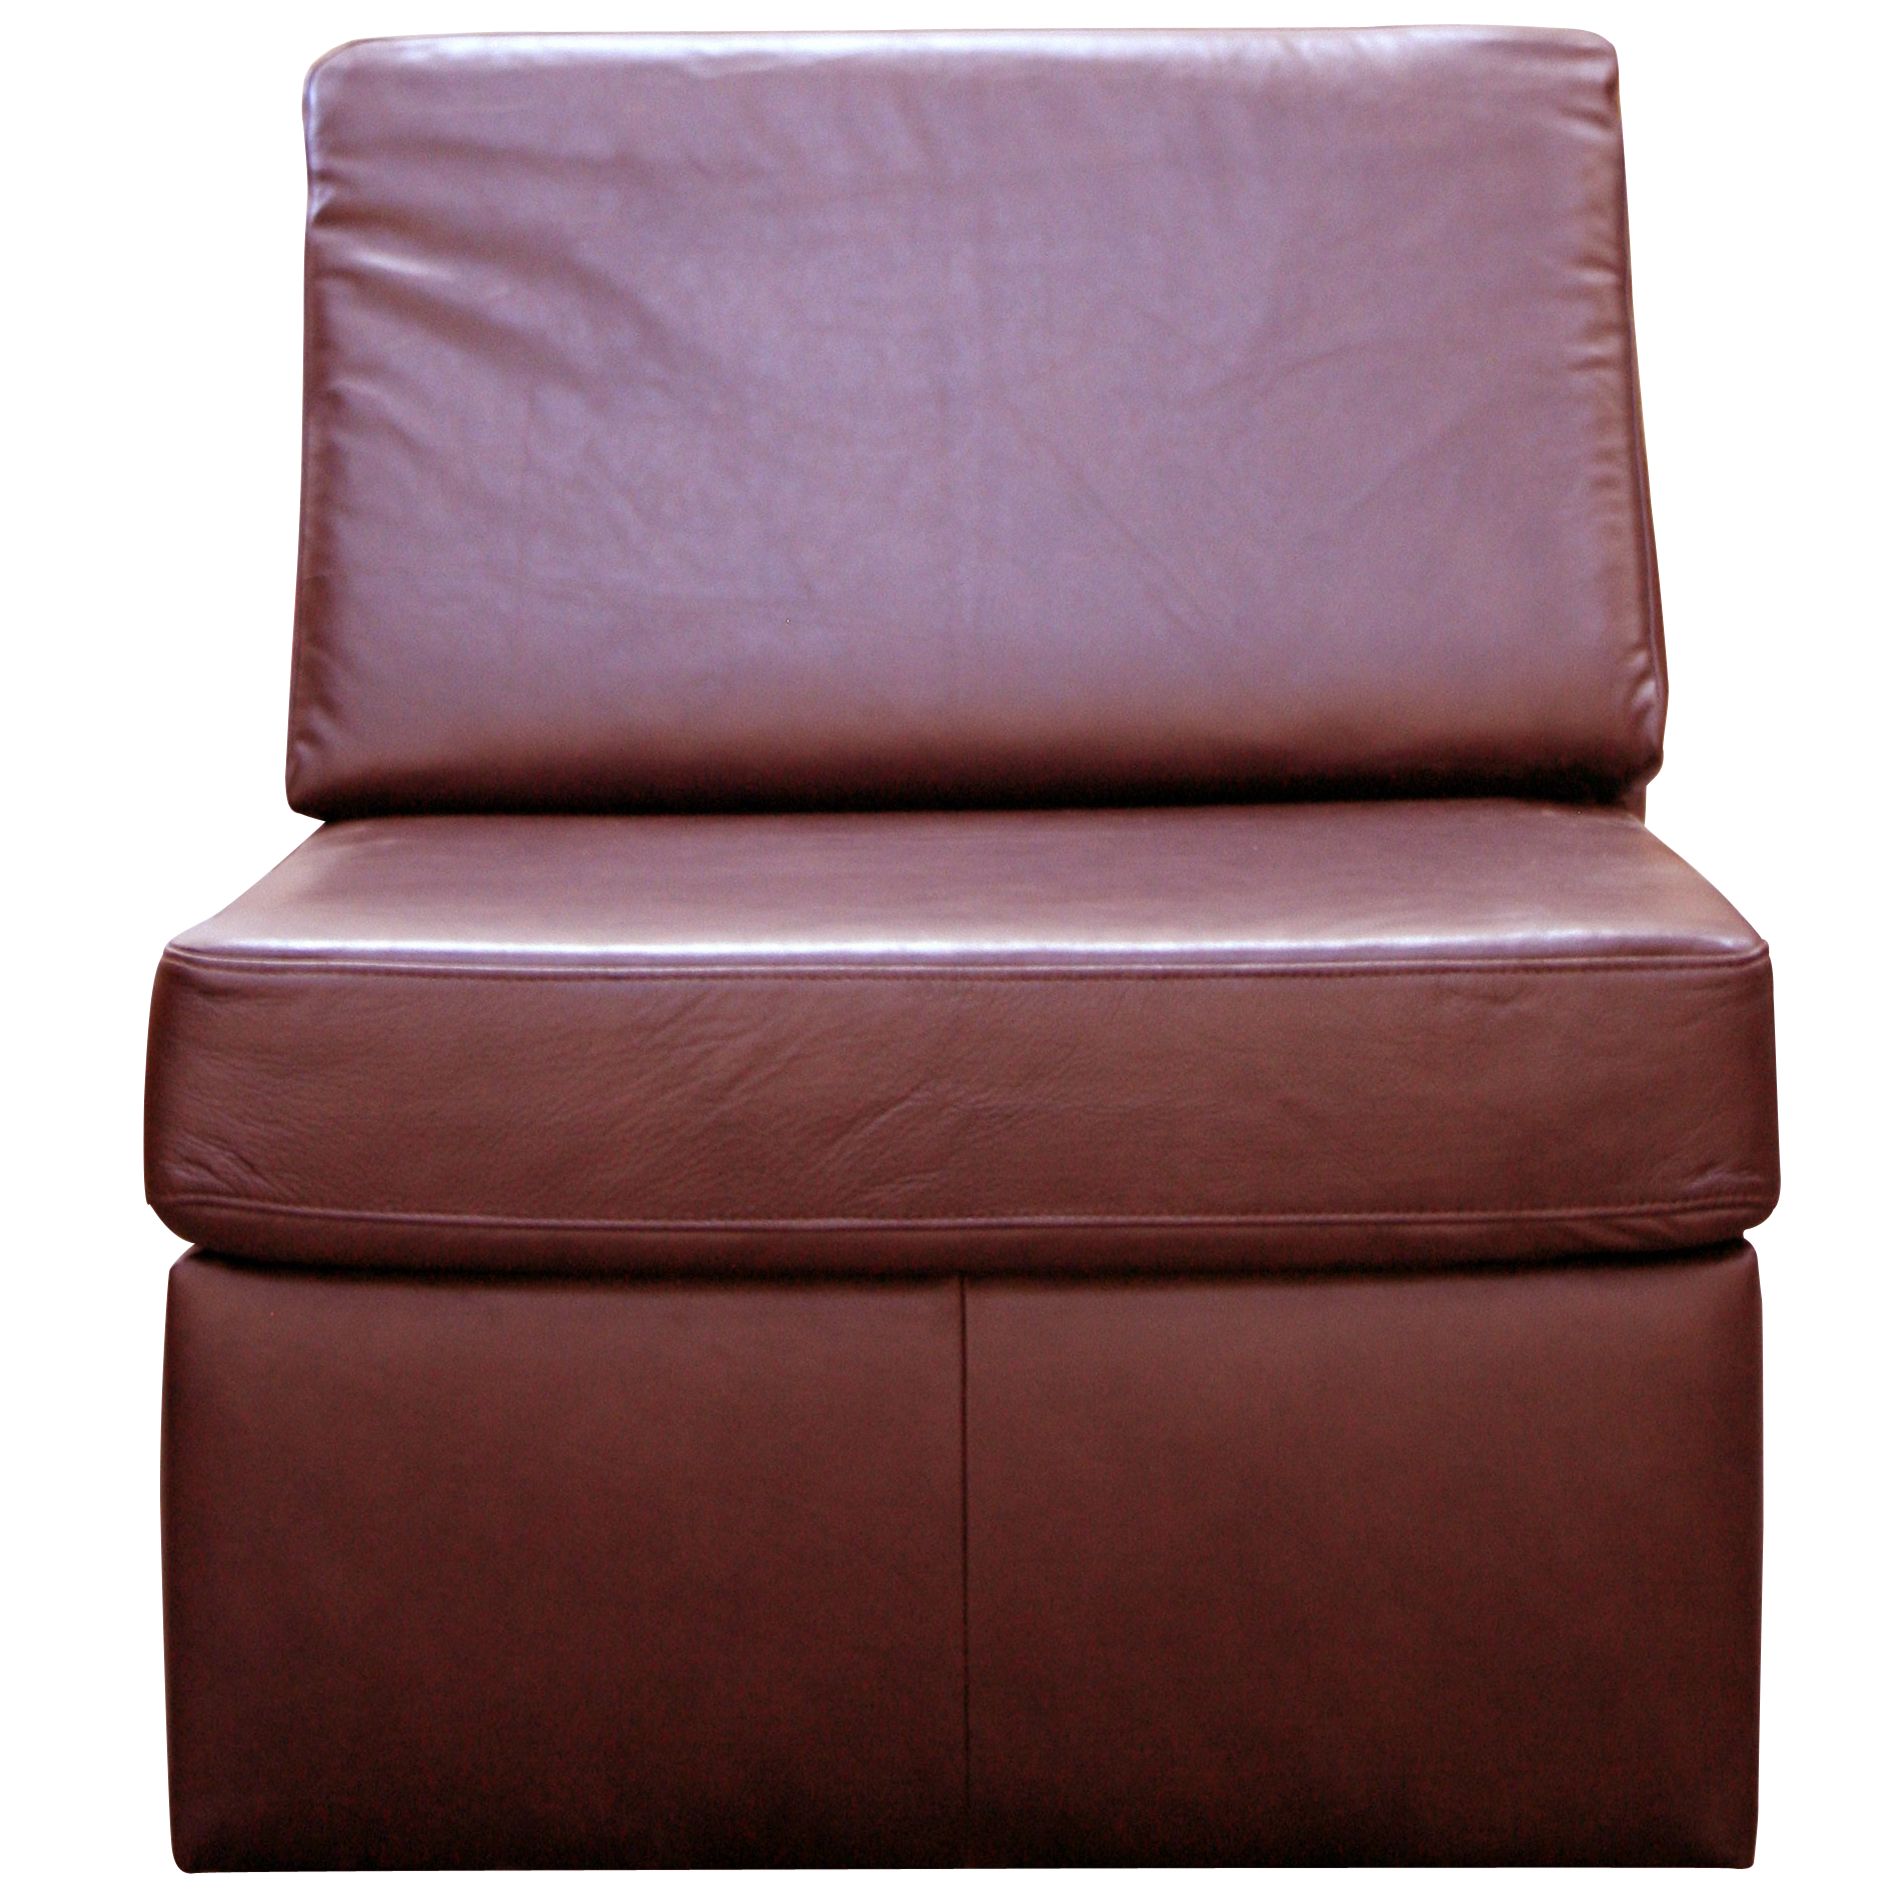 John Lewis Barney Chair Bed, Chestnut Hide at John Lewis